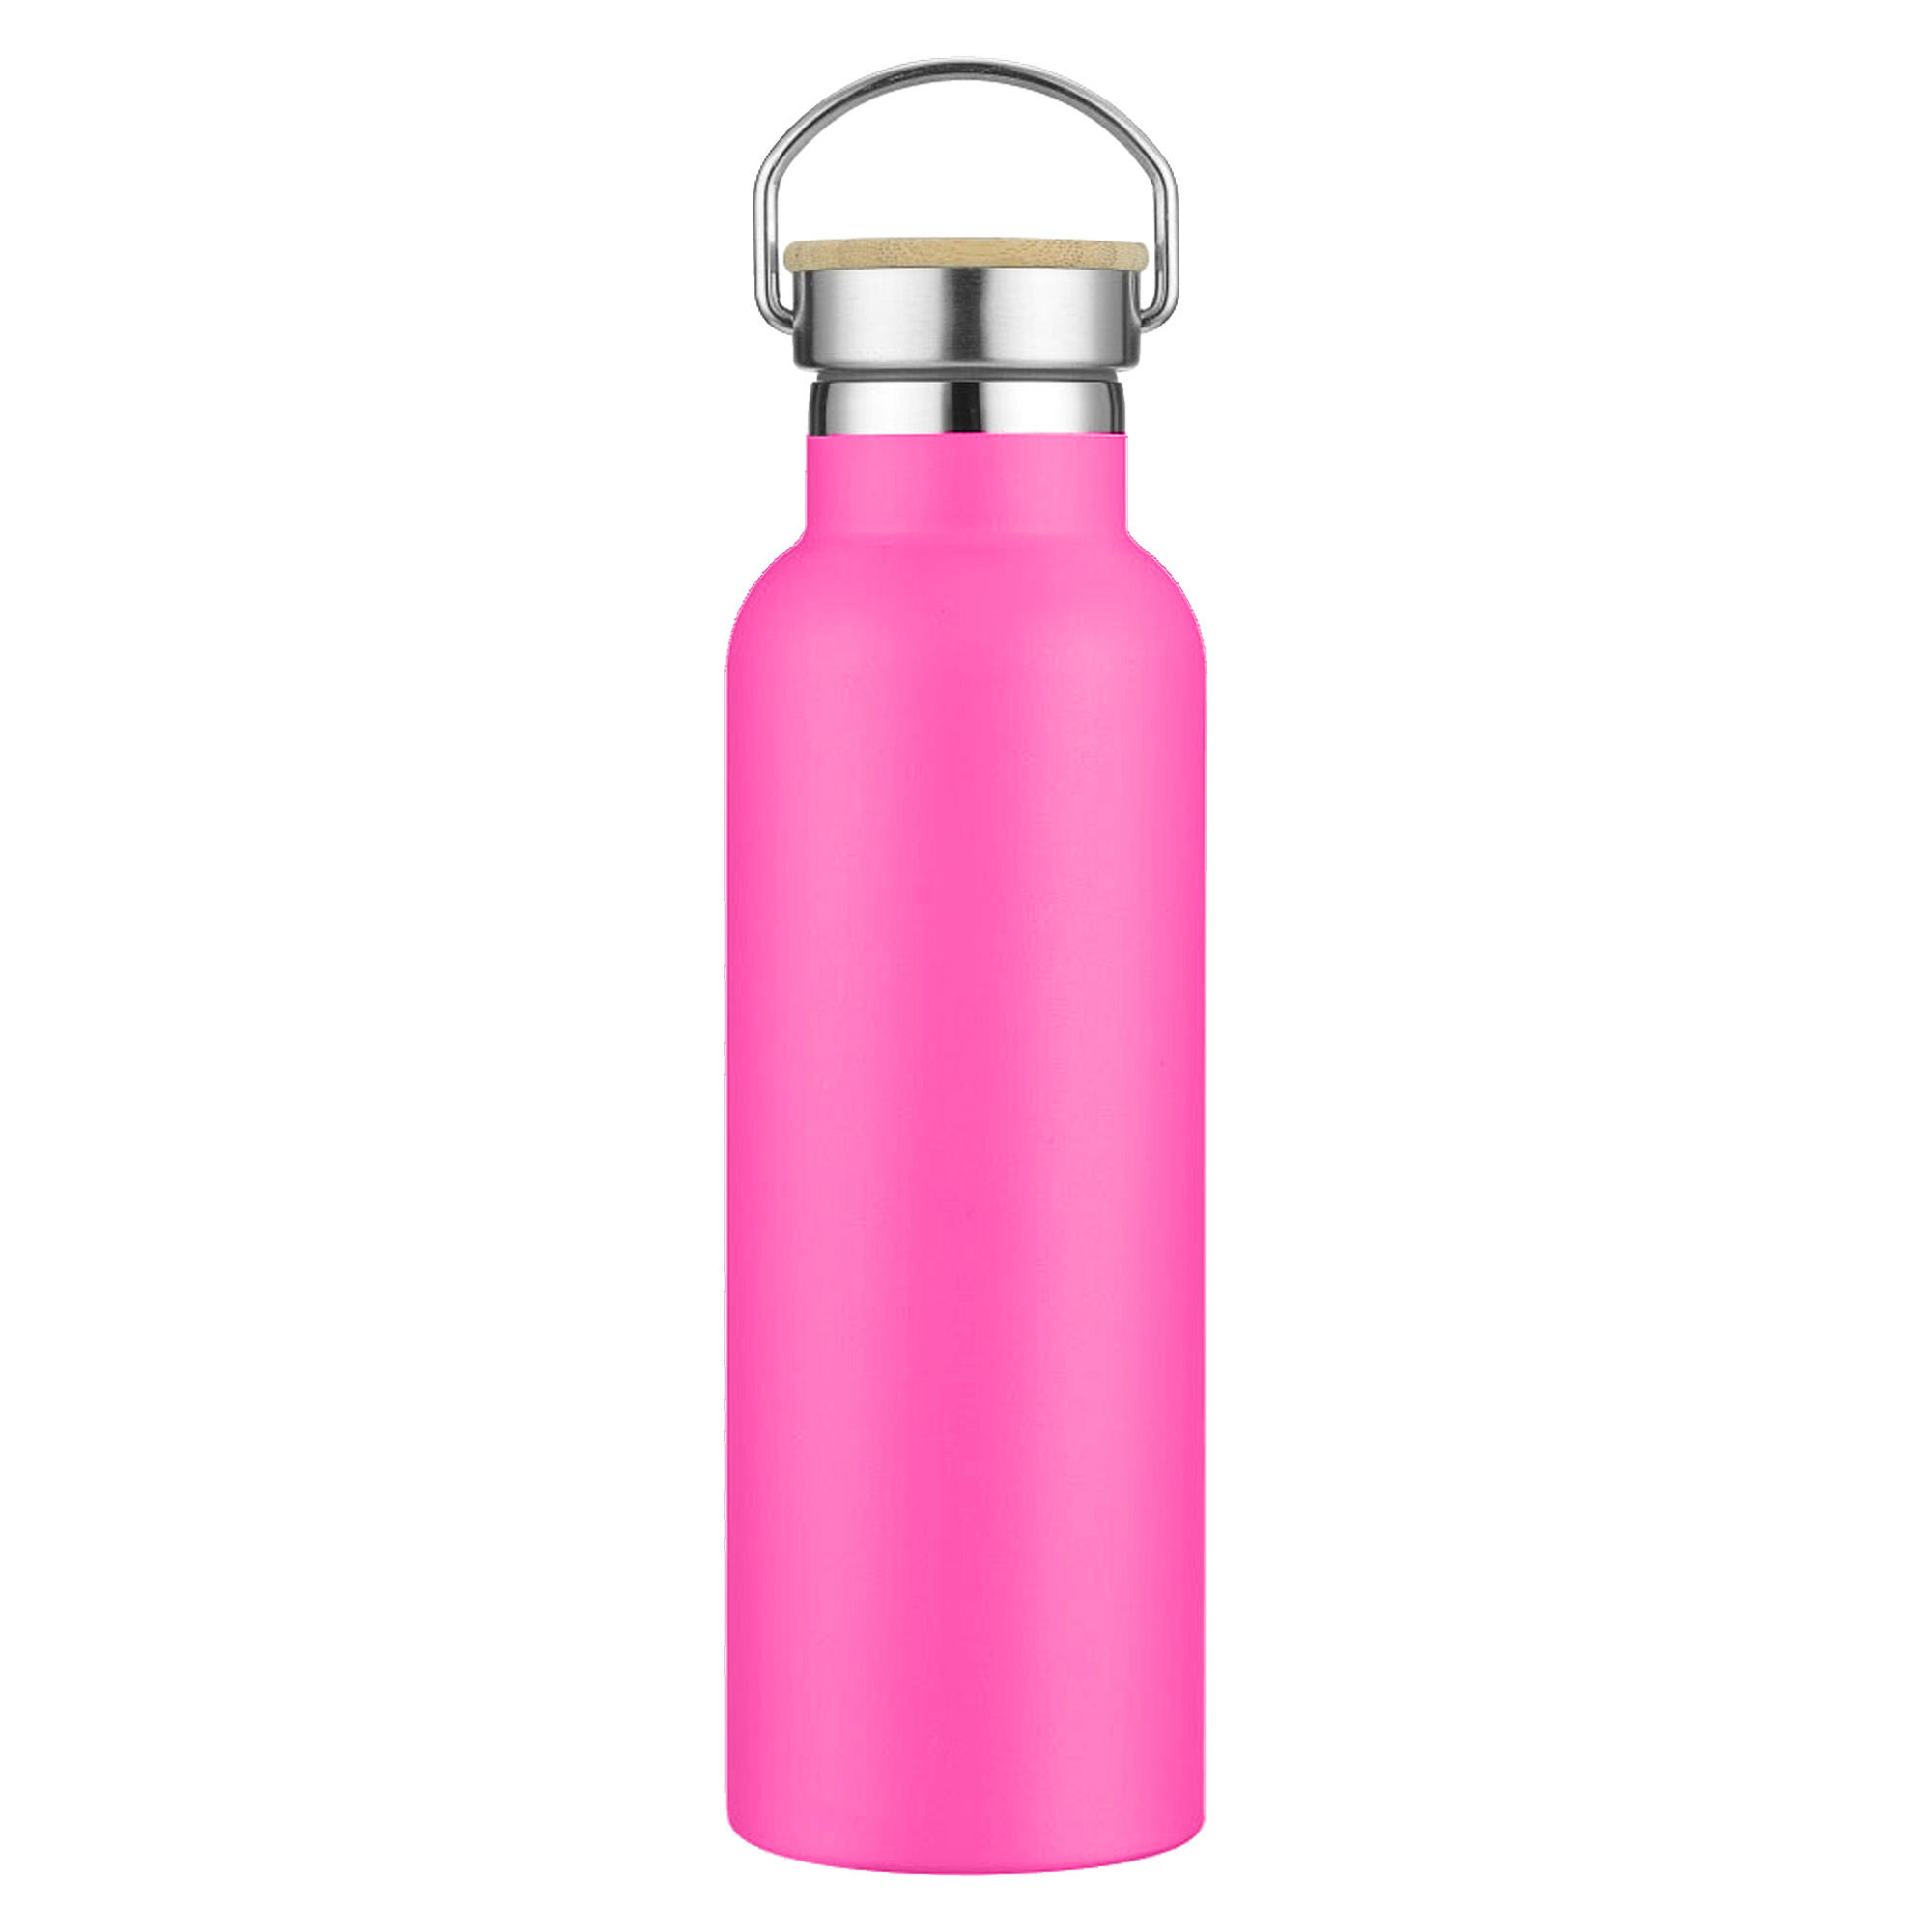 Bulk Promotional Pink Miami Drink Bottle Online in Perth Australia